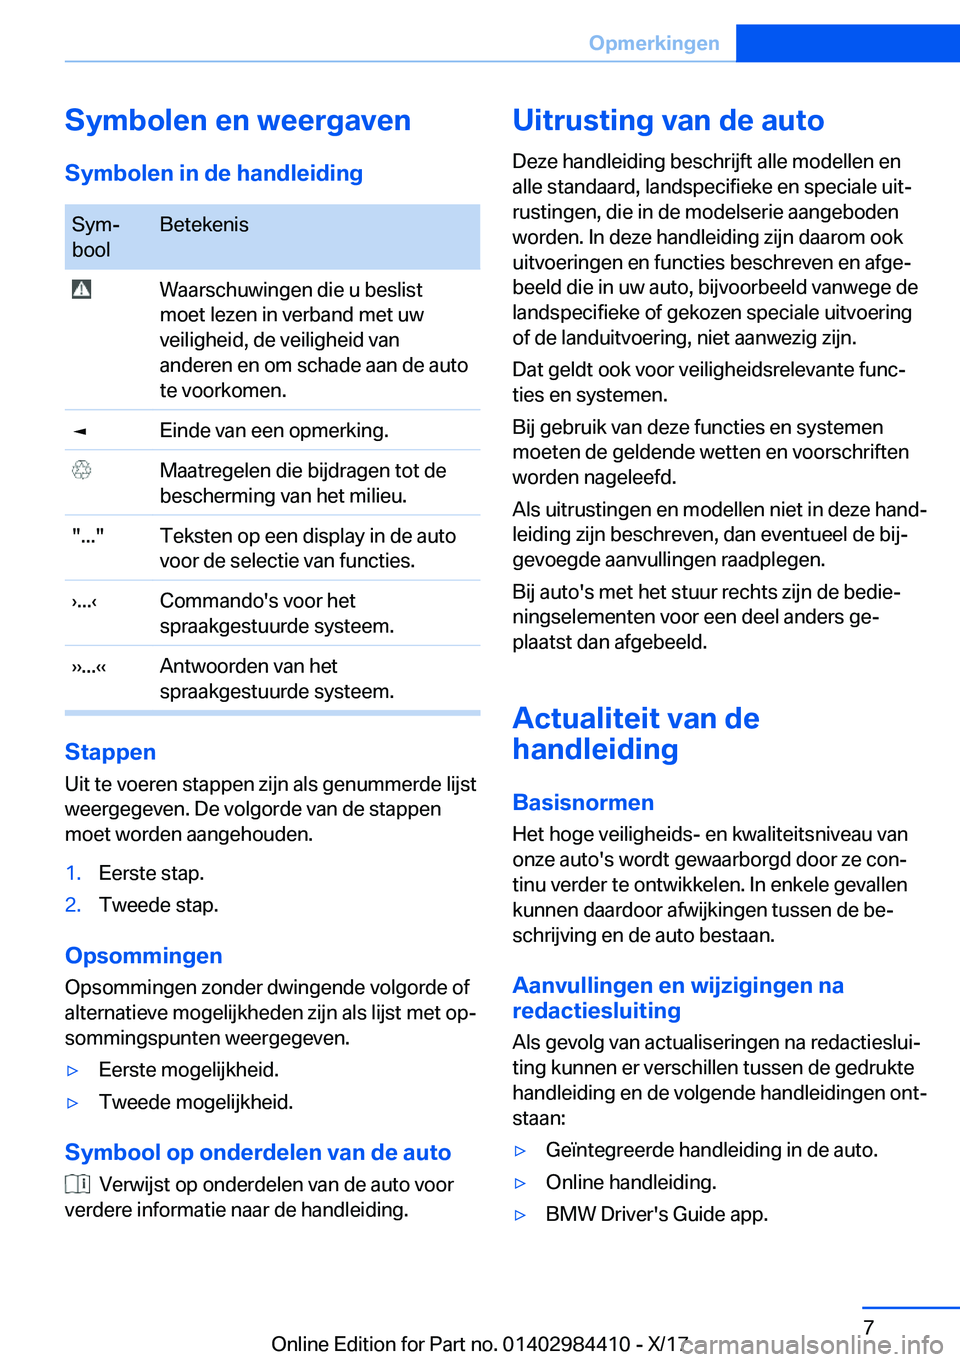 BMW 4 SERIES COUPE 2018  Instructieboekjes (in Dutch) �S�y�m�b�o�l�e�n��e�n��w�e�e�r�g�a�v�e�n�S�y�m�b�o�l�e�n��i�n��d�e��h�a�n�d�l�e�i�d�i�n�g�S�y�mj
�b�o�o�l�B�e�t�e�k�e�n�i�s� �W�a�a�r�s�c�h�u�w�i�n�g�e�n� �d�i�e� �u� �b�e�s�l�i�s�t
�m�o�e�t� �l